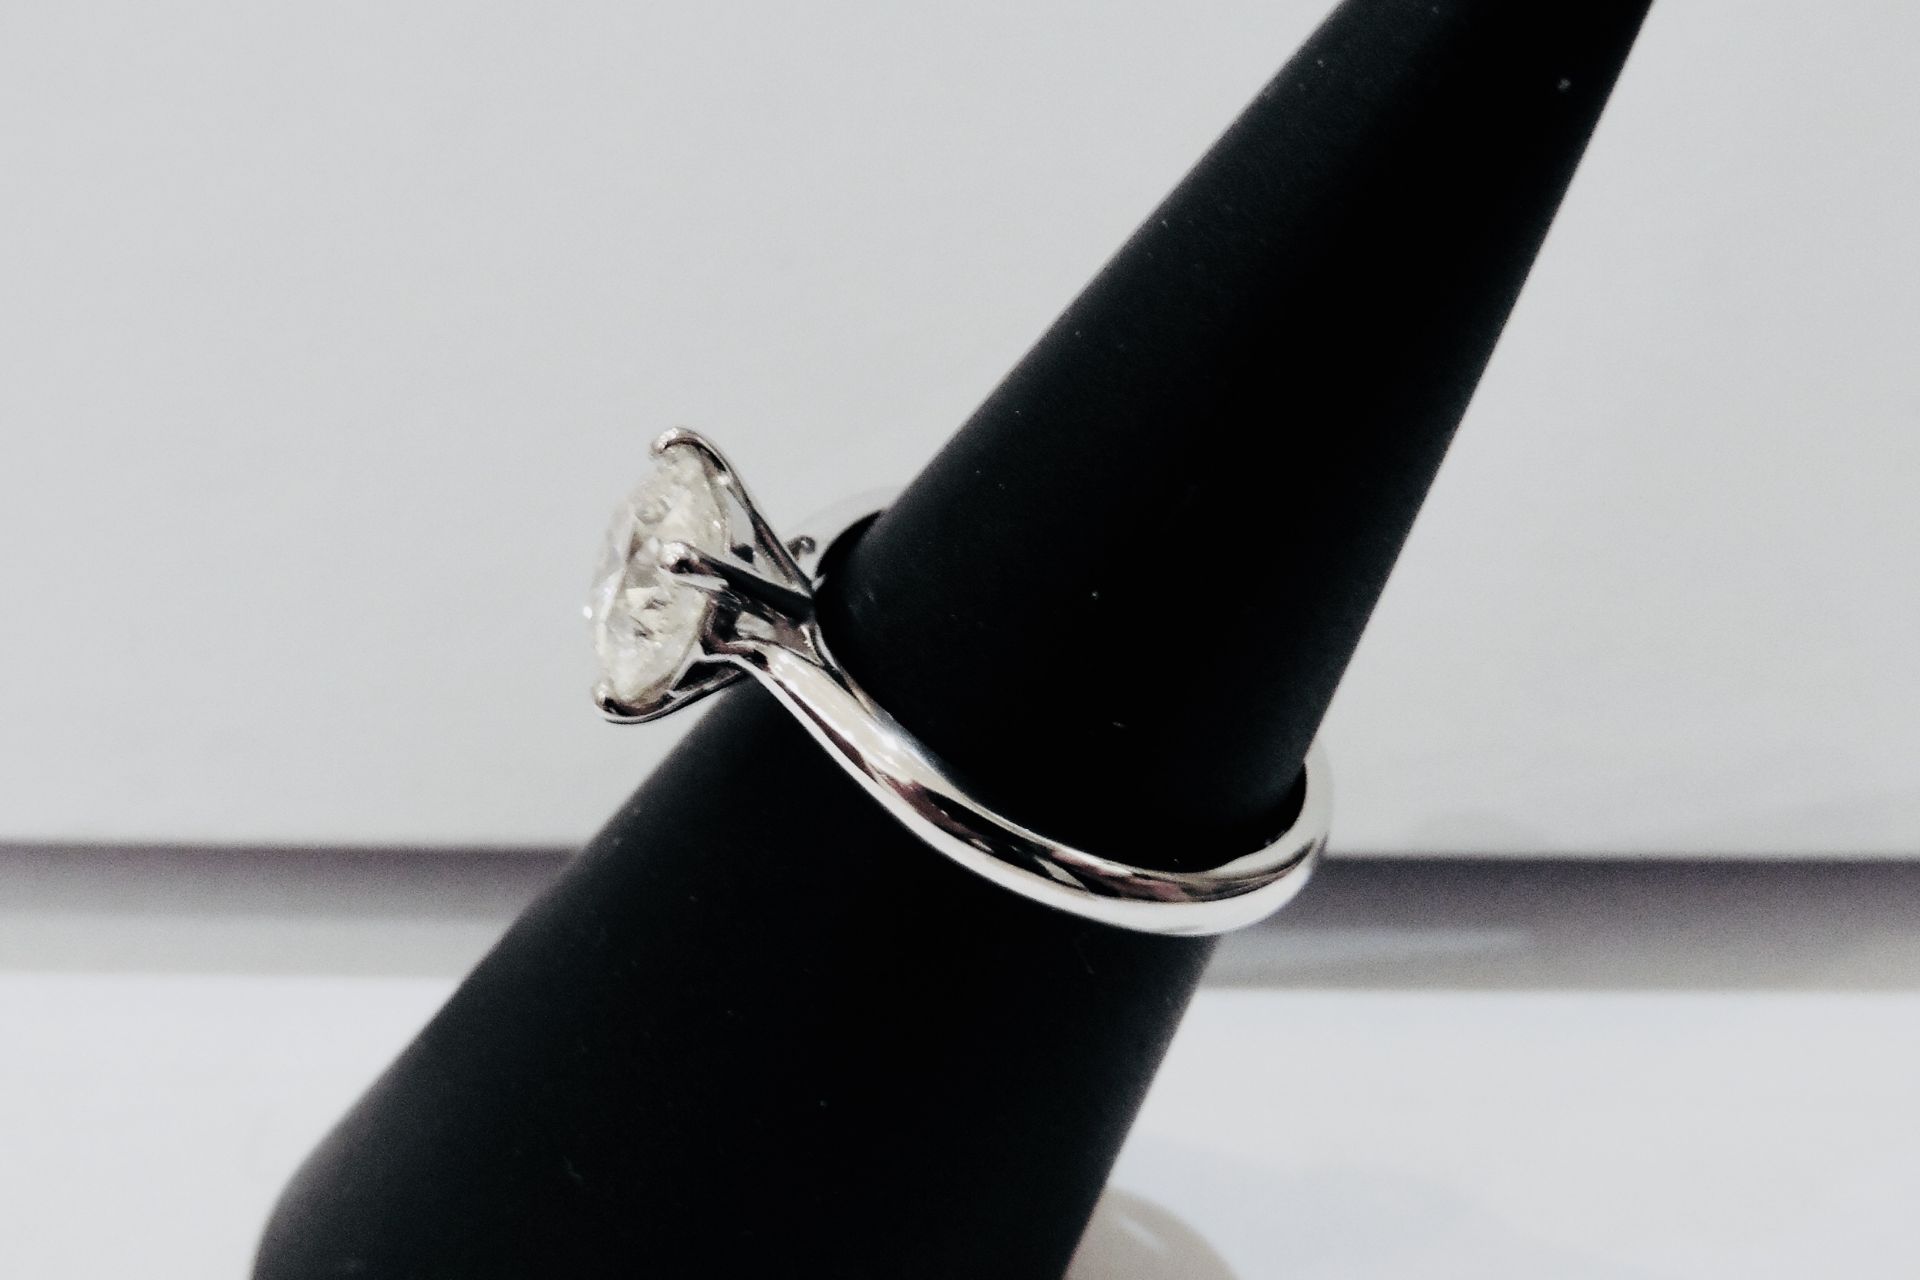 1ct Pear shape diamond, EGL certification E colour si1 clarity, Classic Platinum setting 3.8gms, UK - Image 3 of 4